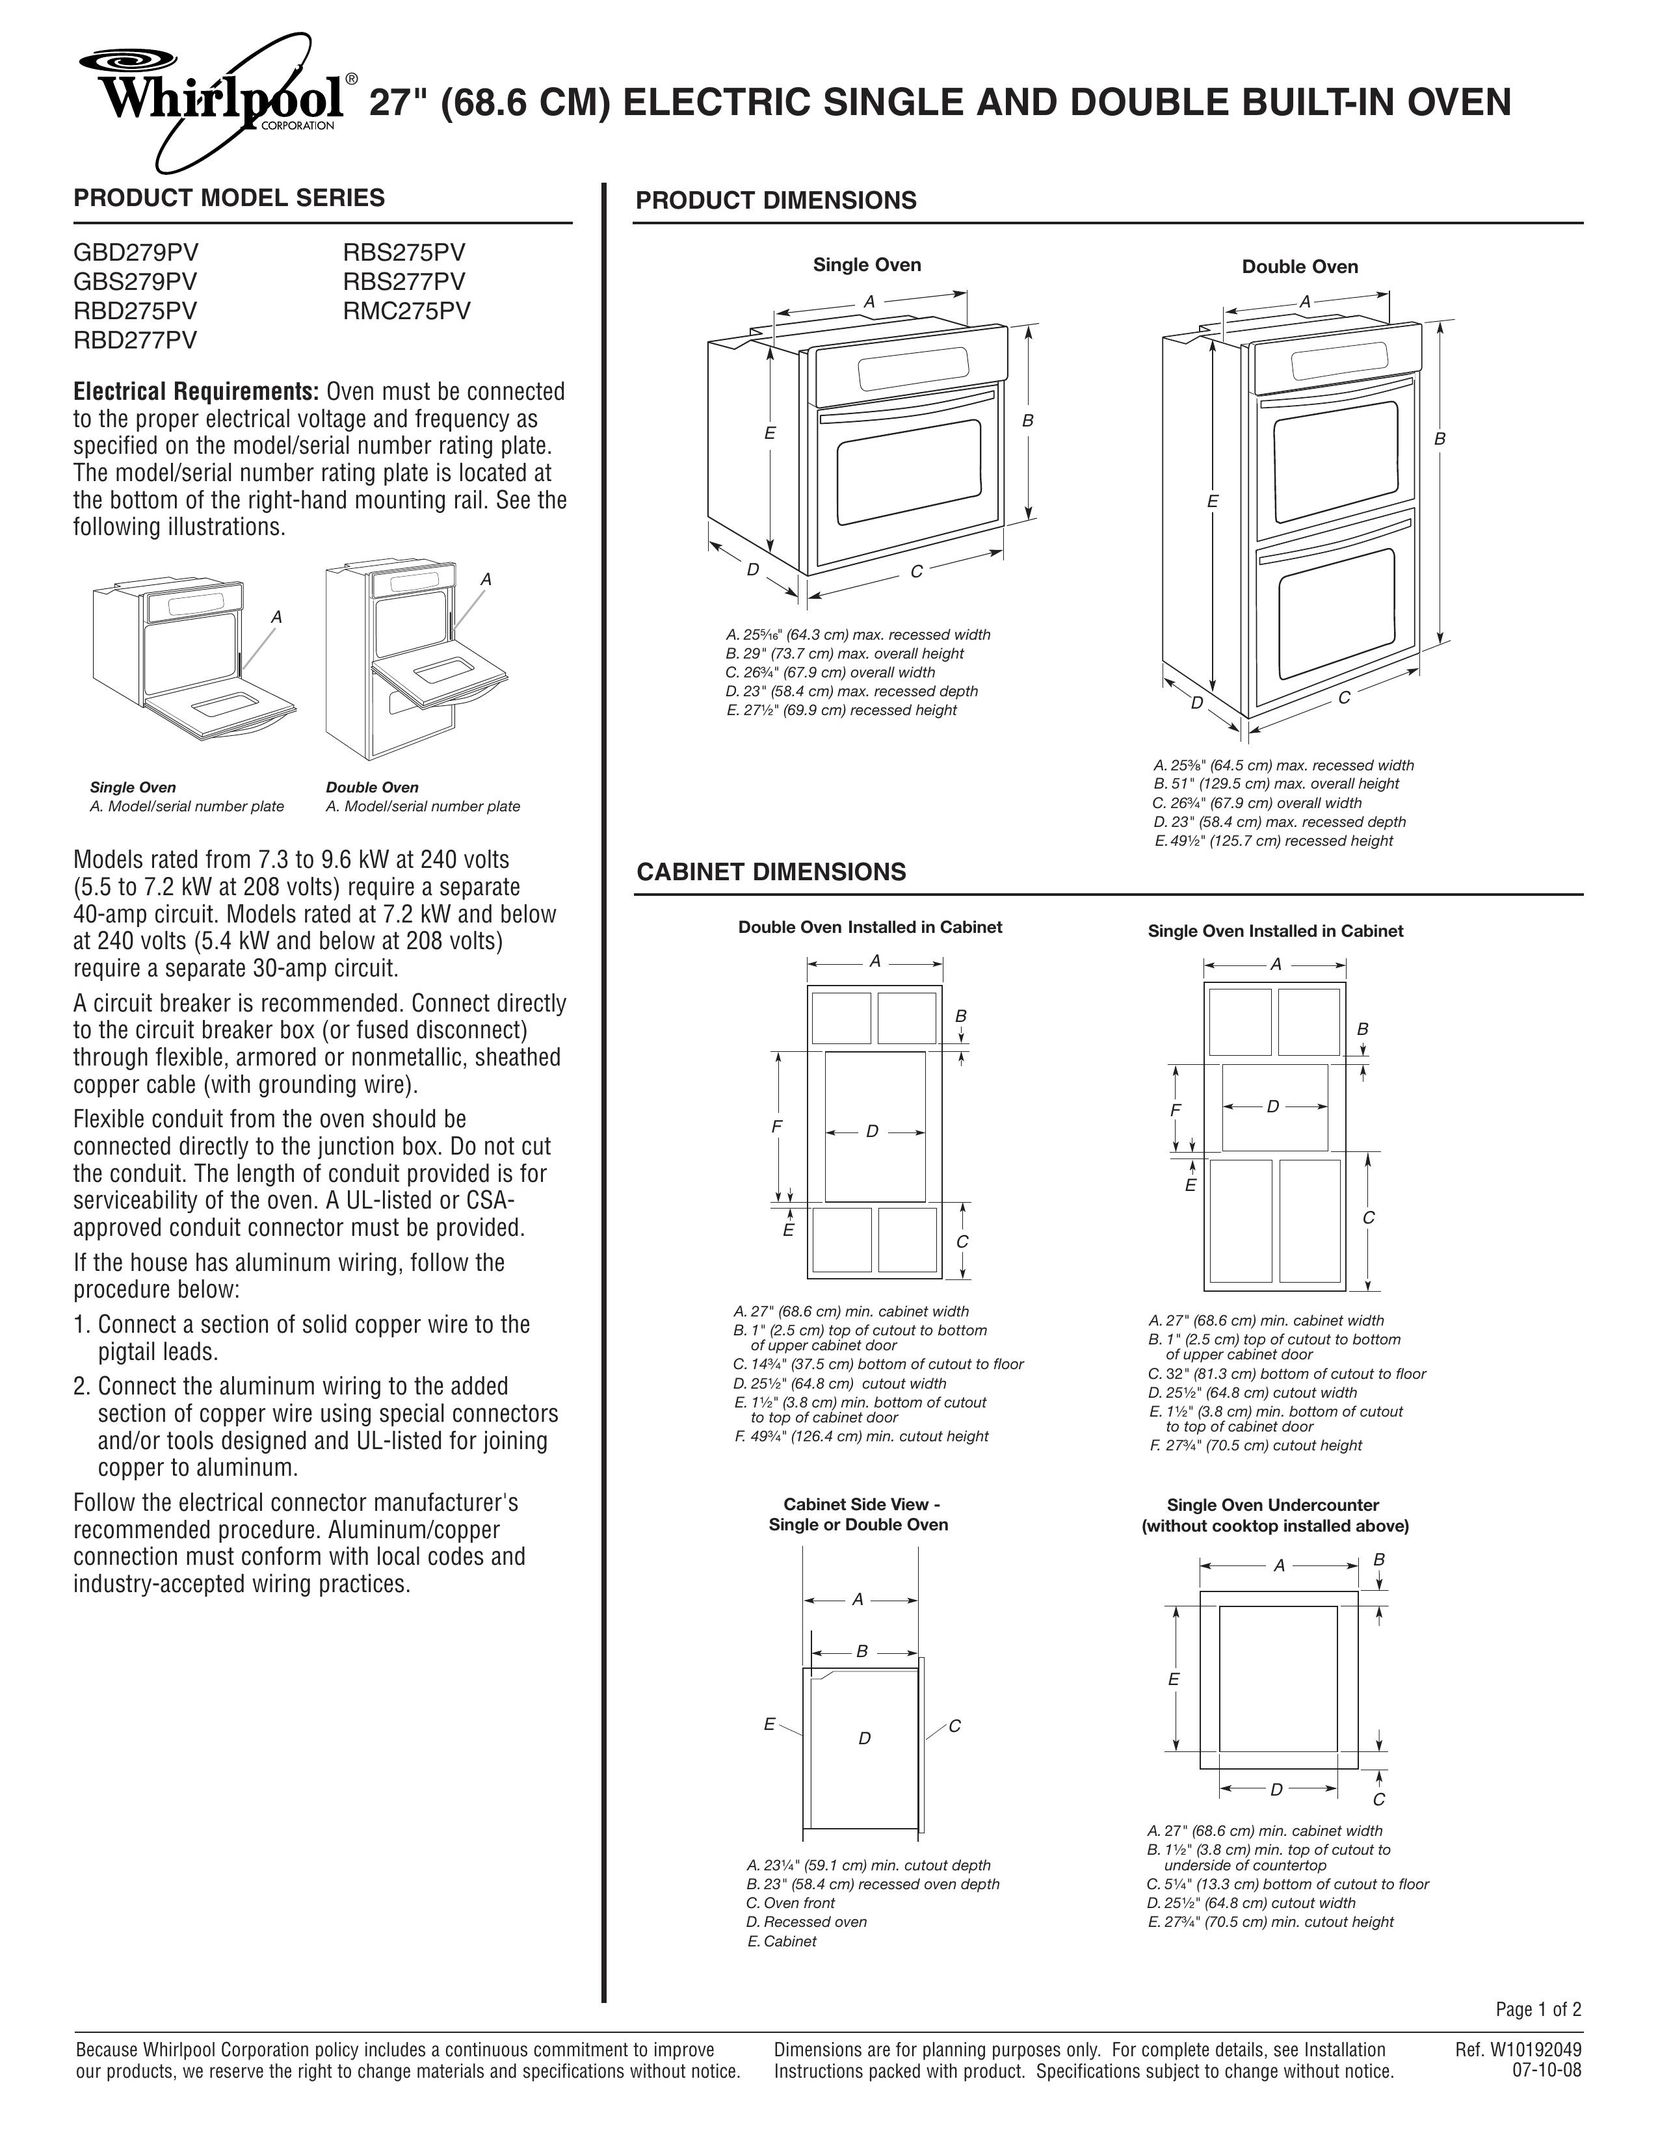 Whirlpool GBD279PV Oven User Manual